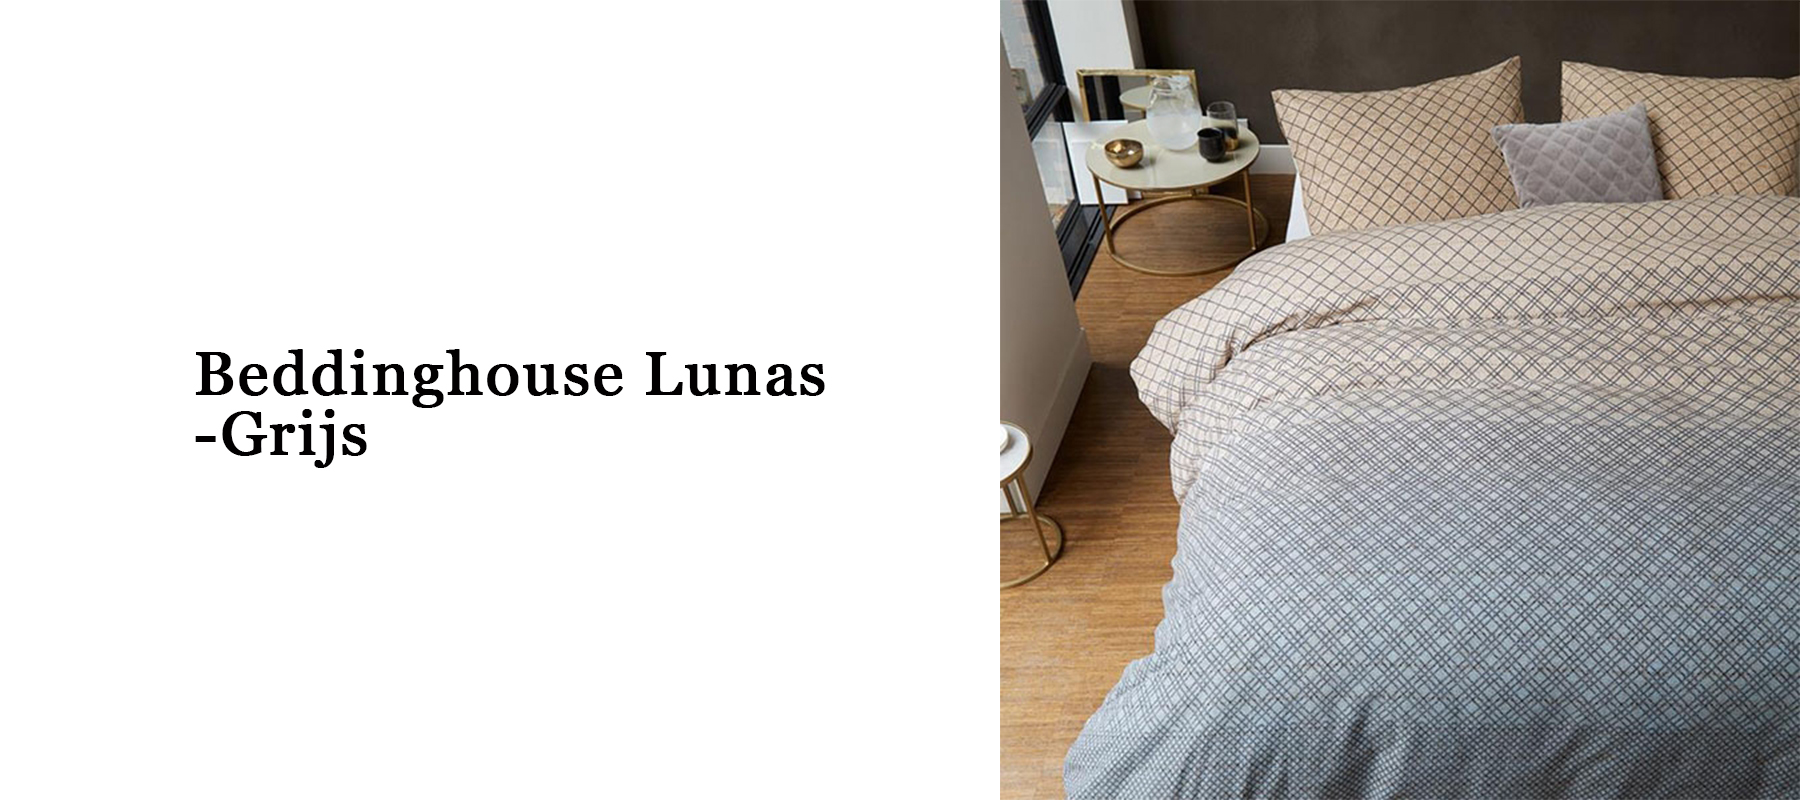 Beddinghouse Lunas - Grijs